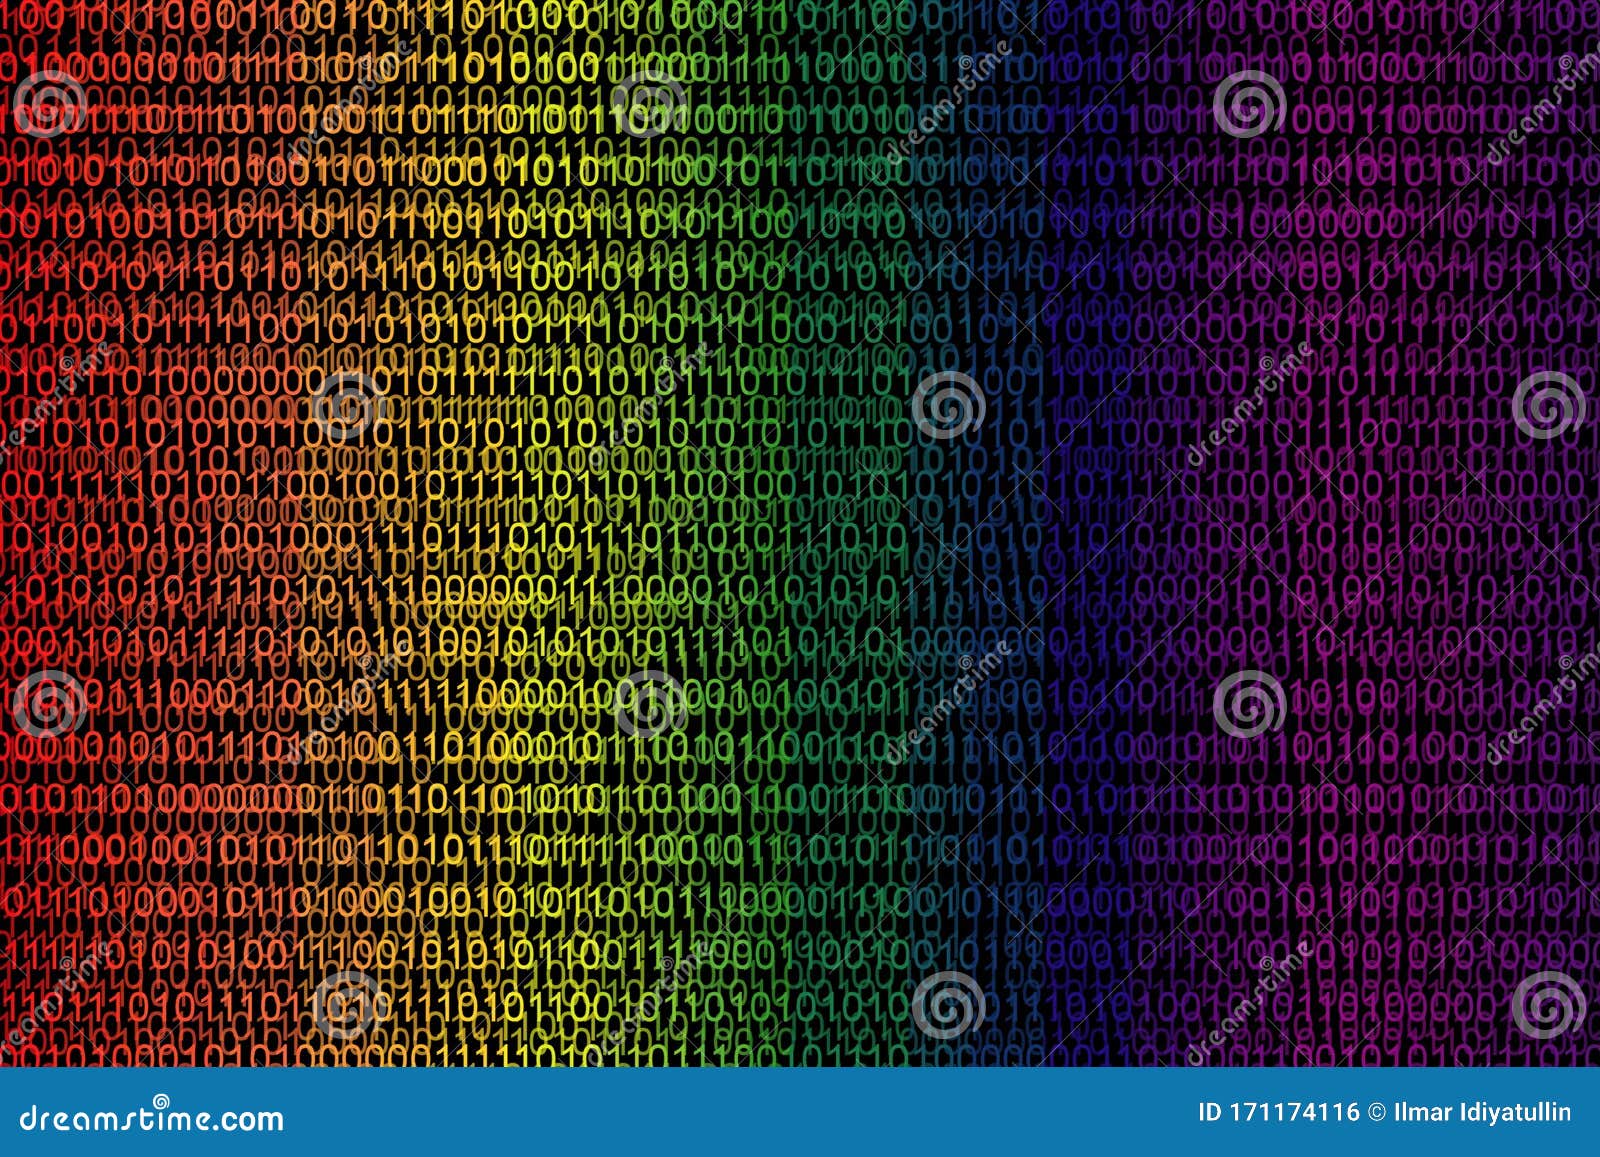 simulation-of-computer-binary-code-digital-matrix-of-bright-rainbow-colors-stock-illustration